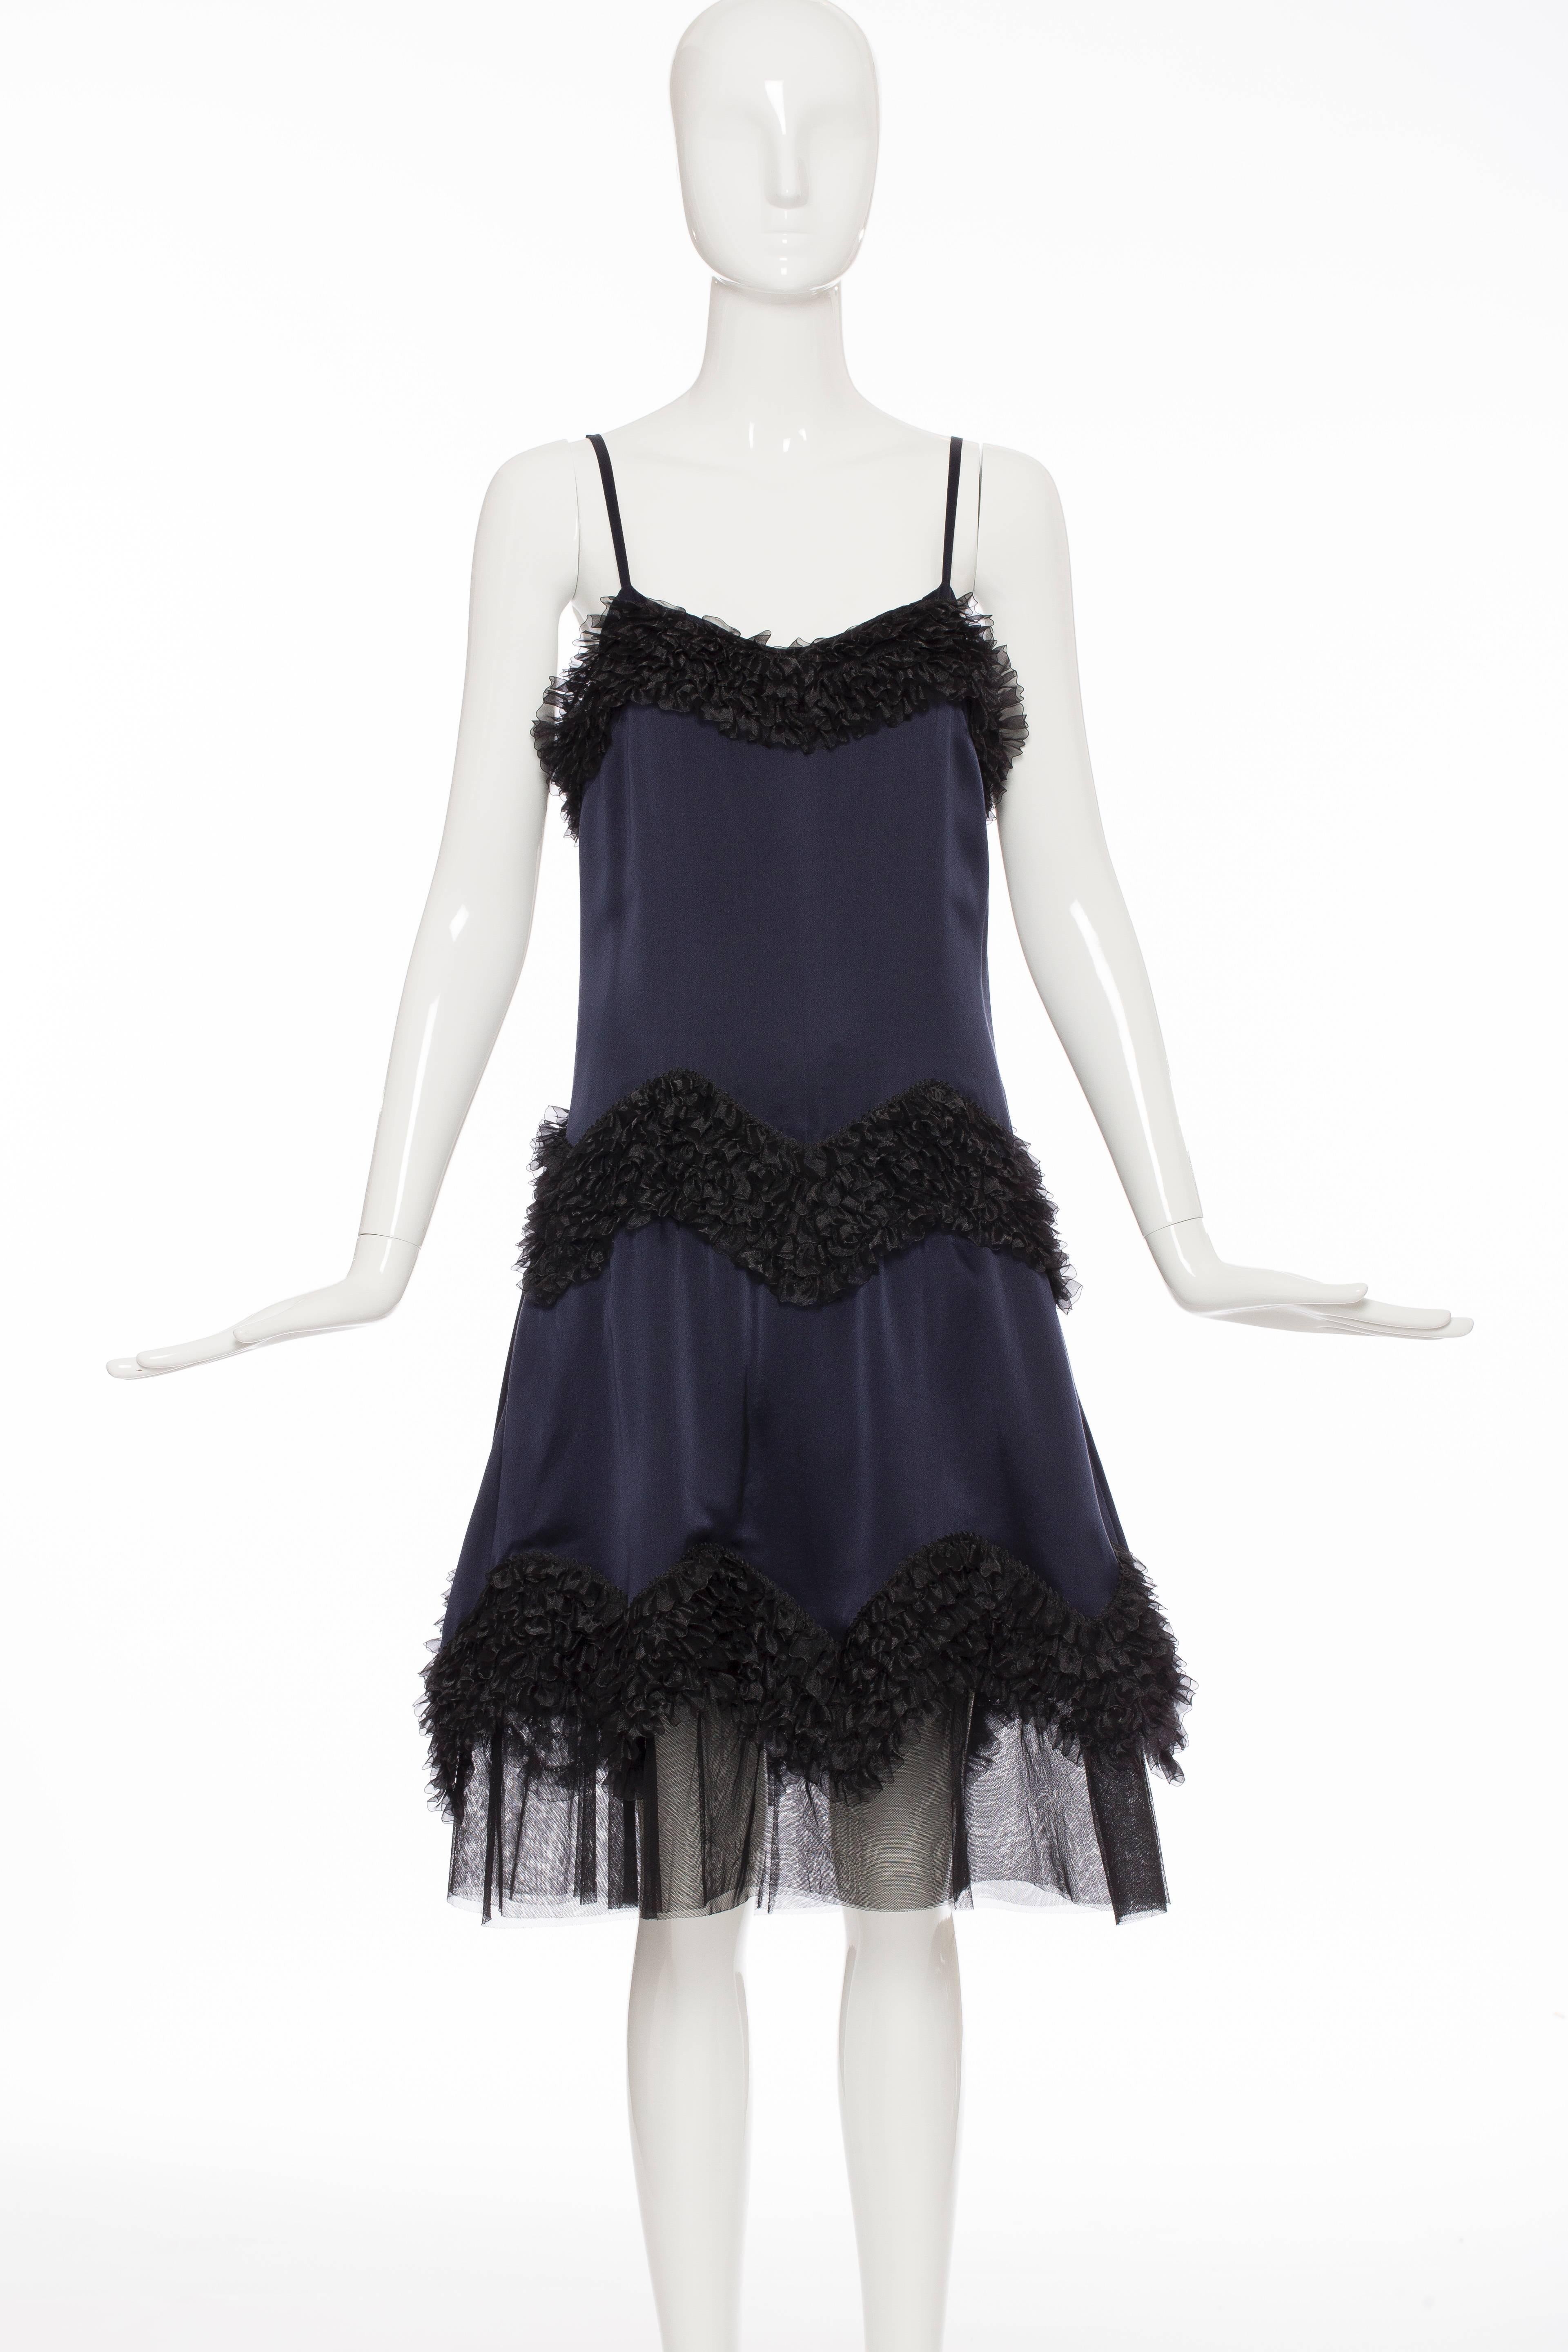 Chanel, Pre-Fall 2004, midnight blue and black silk satin  sleeveless dress with ruffled trim and back zip closure.

EU. 40
US. 8

Bust 34”, Waist 34”, Hip 50”, Length 43”